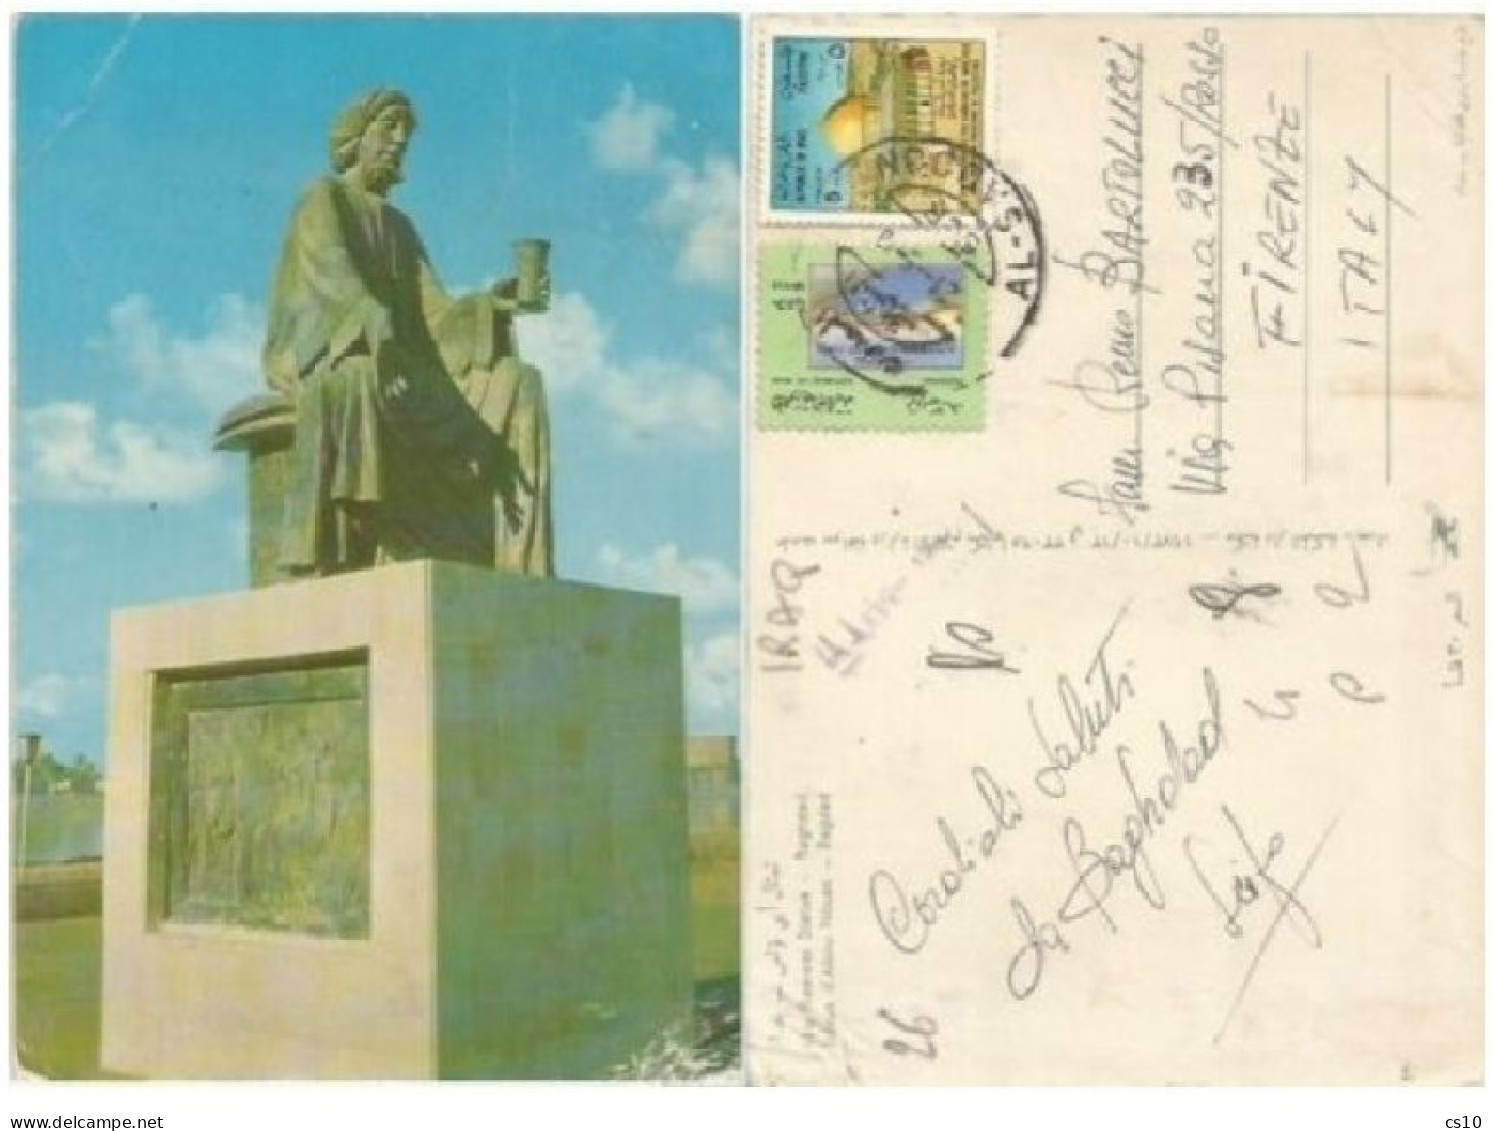 Iraq Irak Baghdad Abu Nawwas Statue Pcard Useed 21sep1978 - Irak